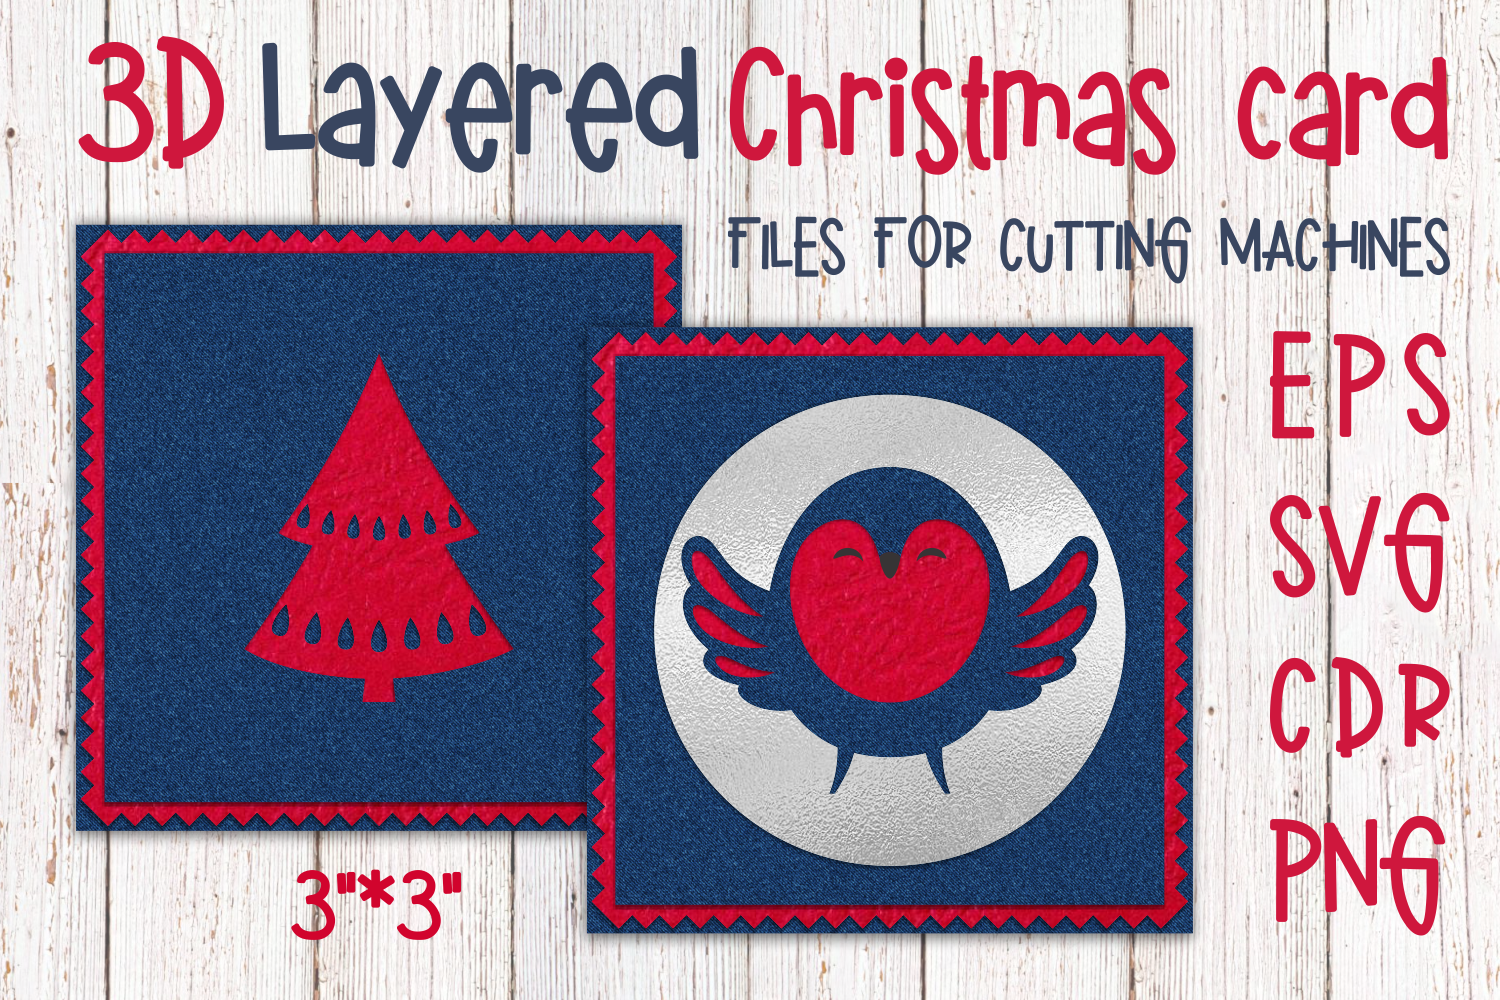 3d Layered Christmas Card With Bird By Olga Belova Thehungryjpeg Com